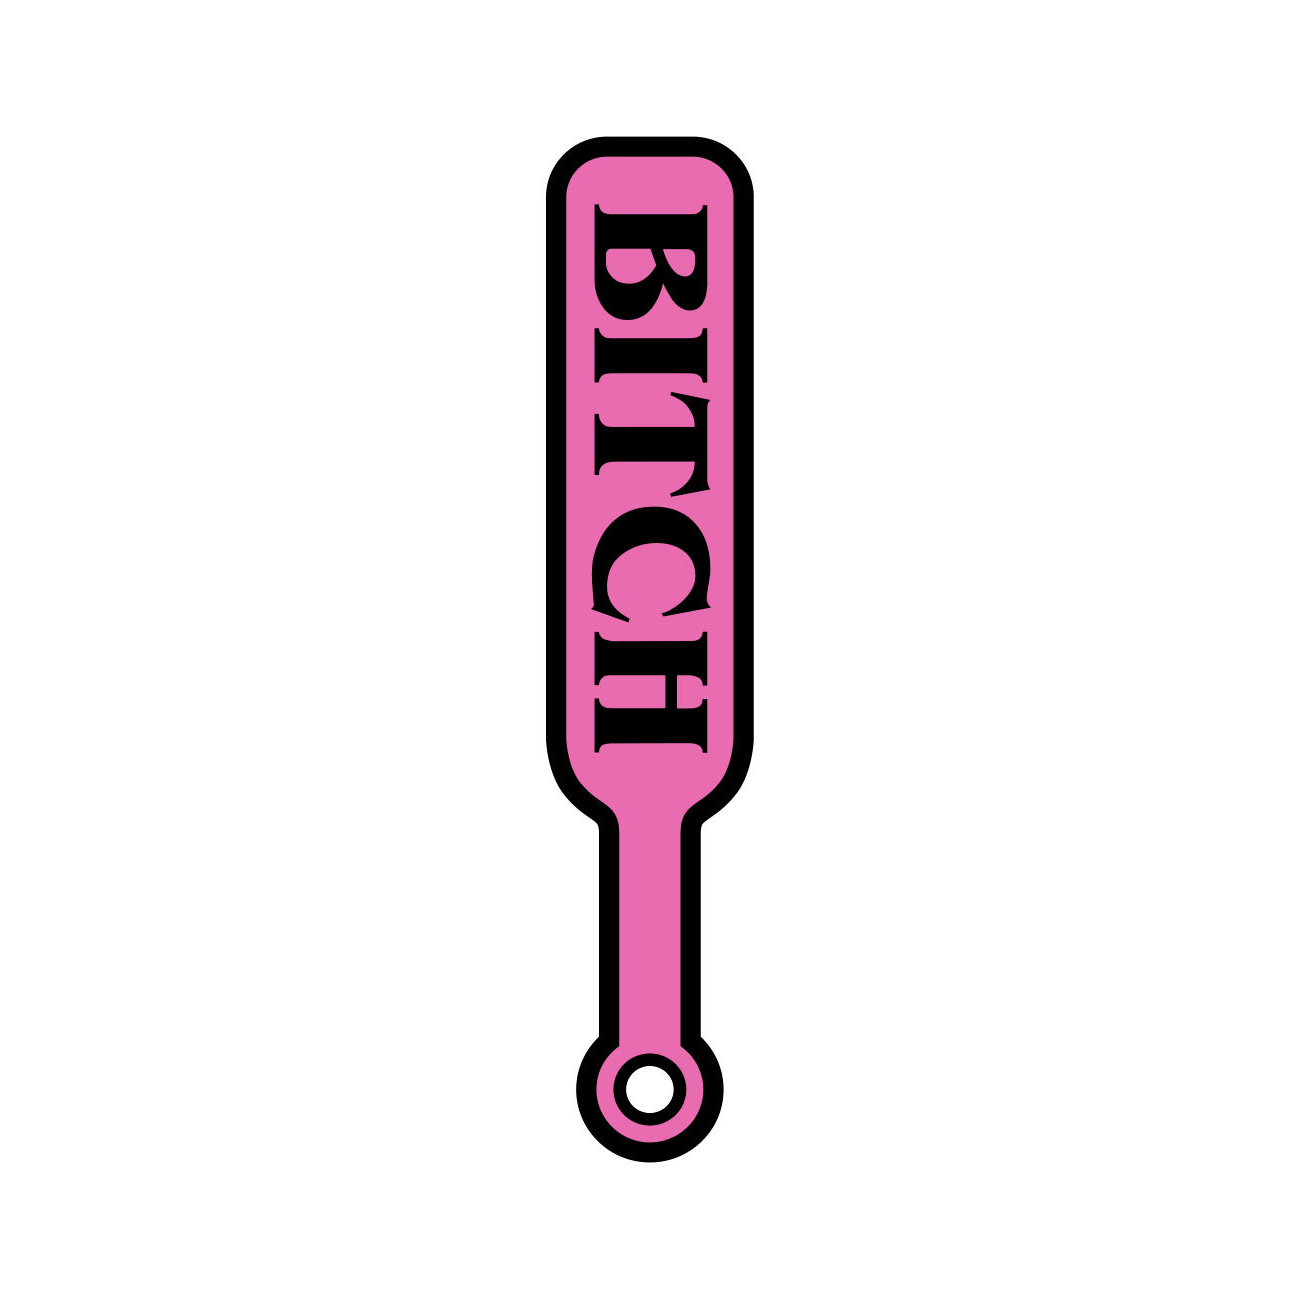 "Bitch" Paddle Soft Enamel Pin by Wood Rocket - rolik